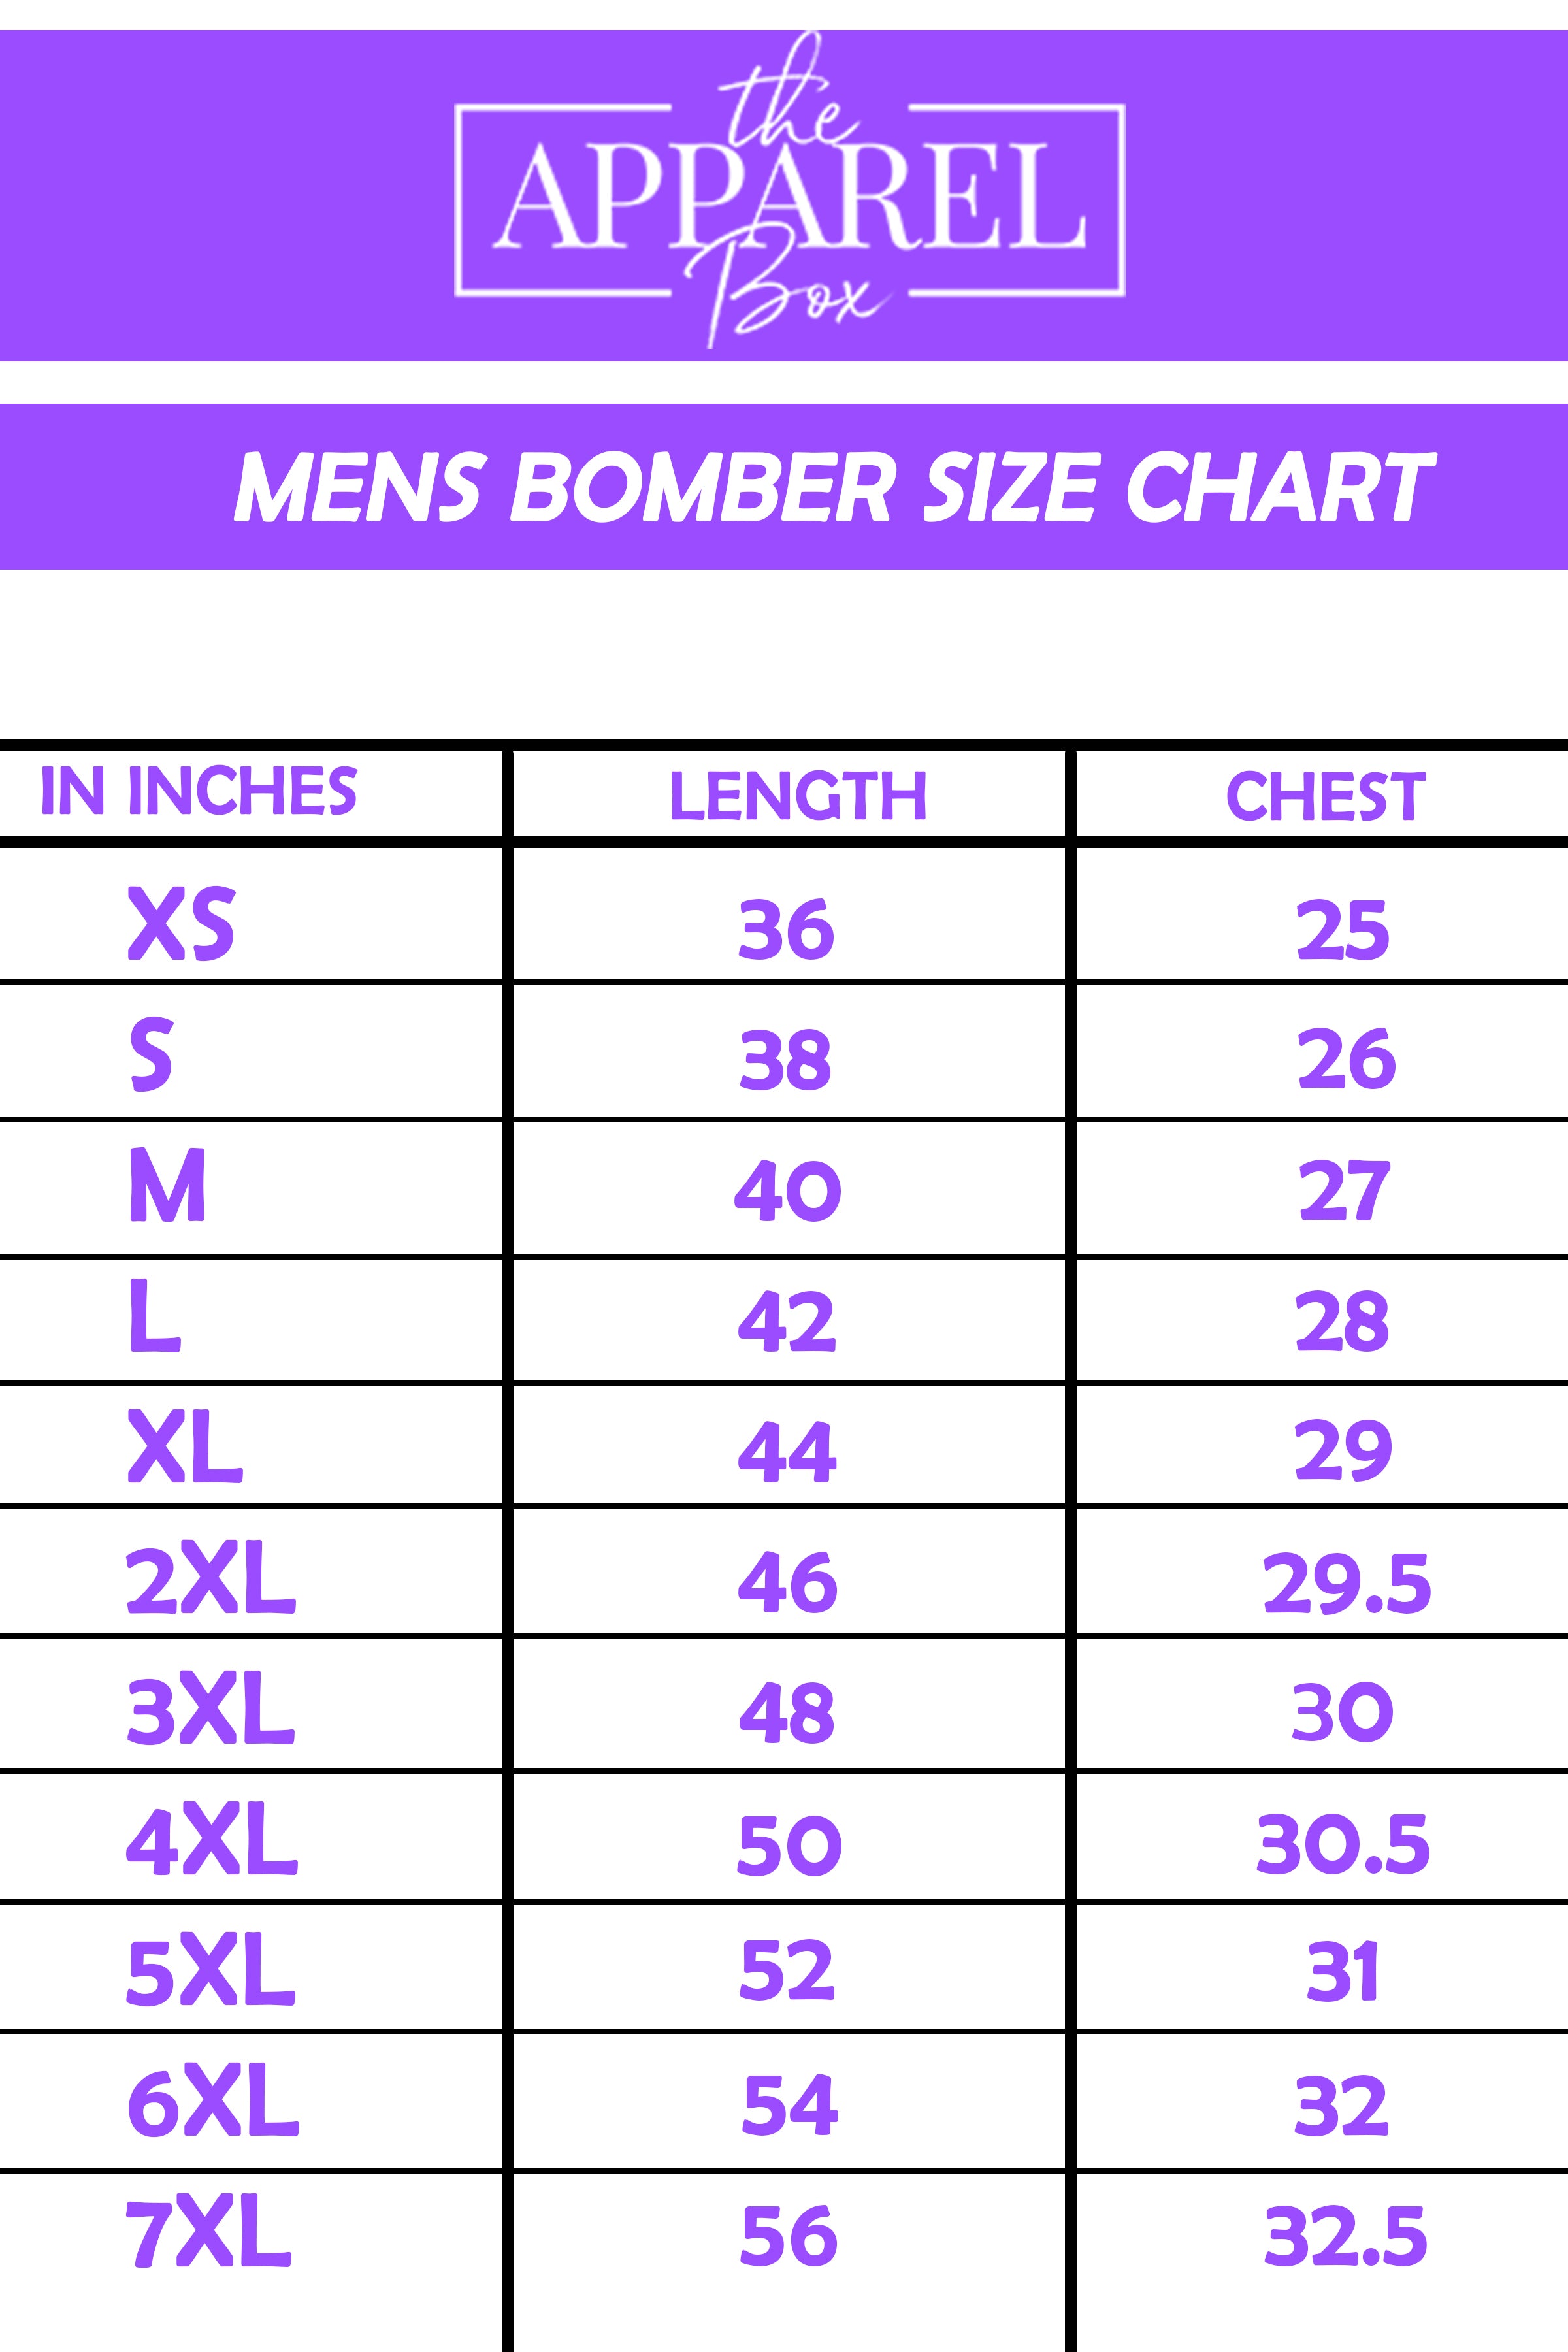 Men's Bomber Size Chart – The Apparel Box